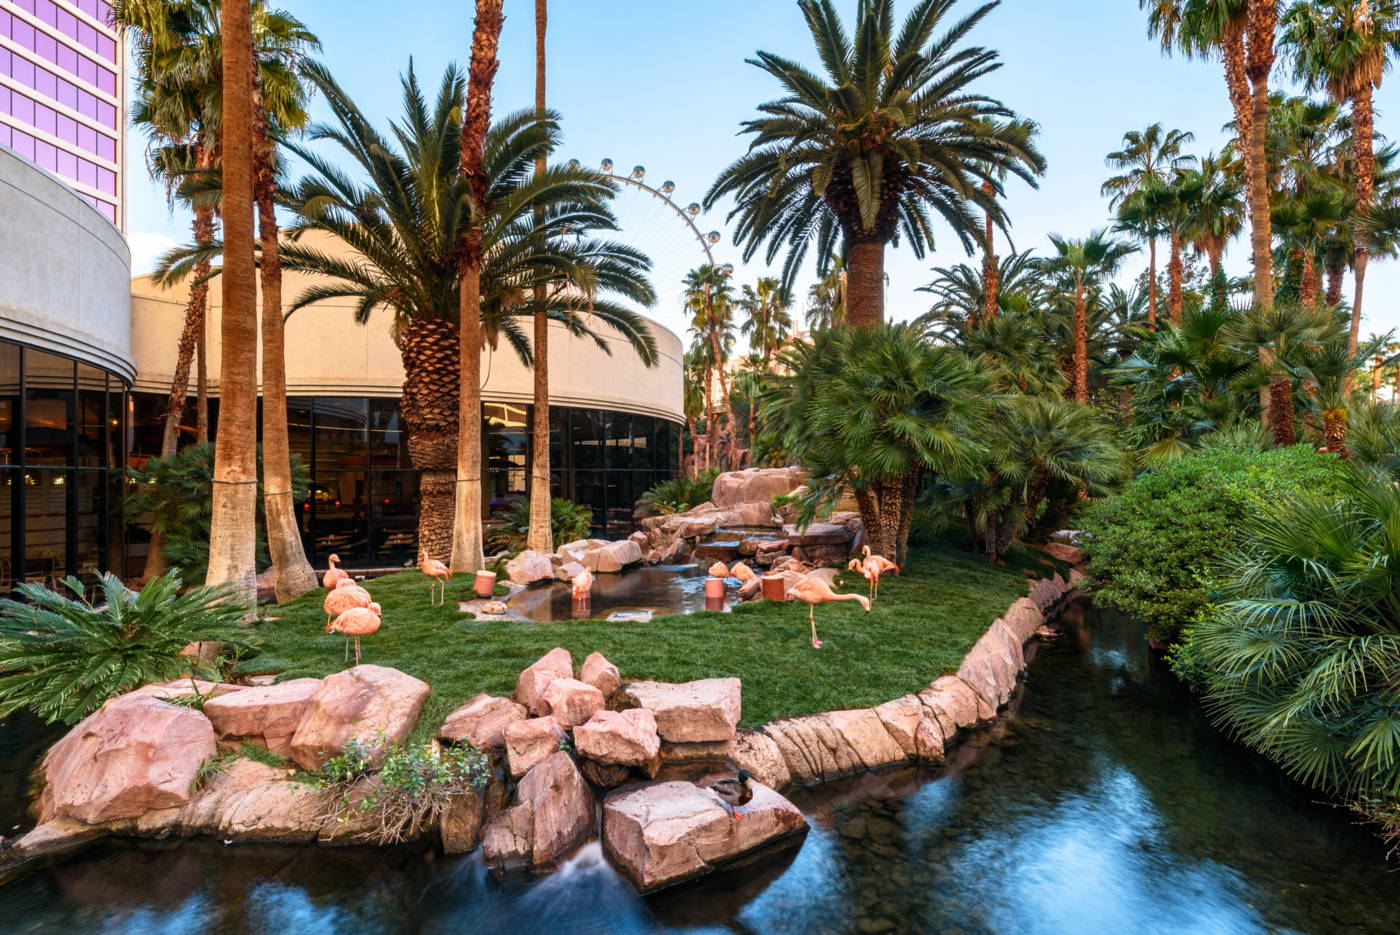 Flamingo Wildlife Habitat Las Vegas